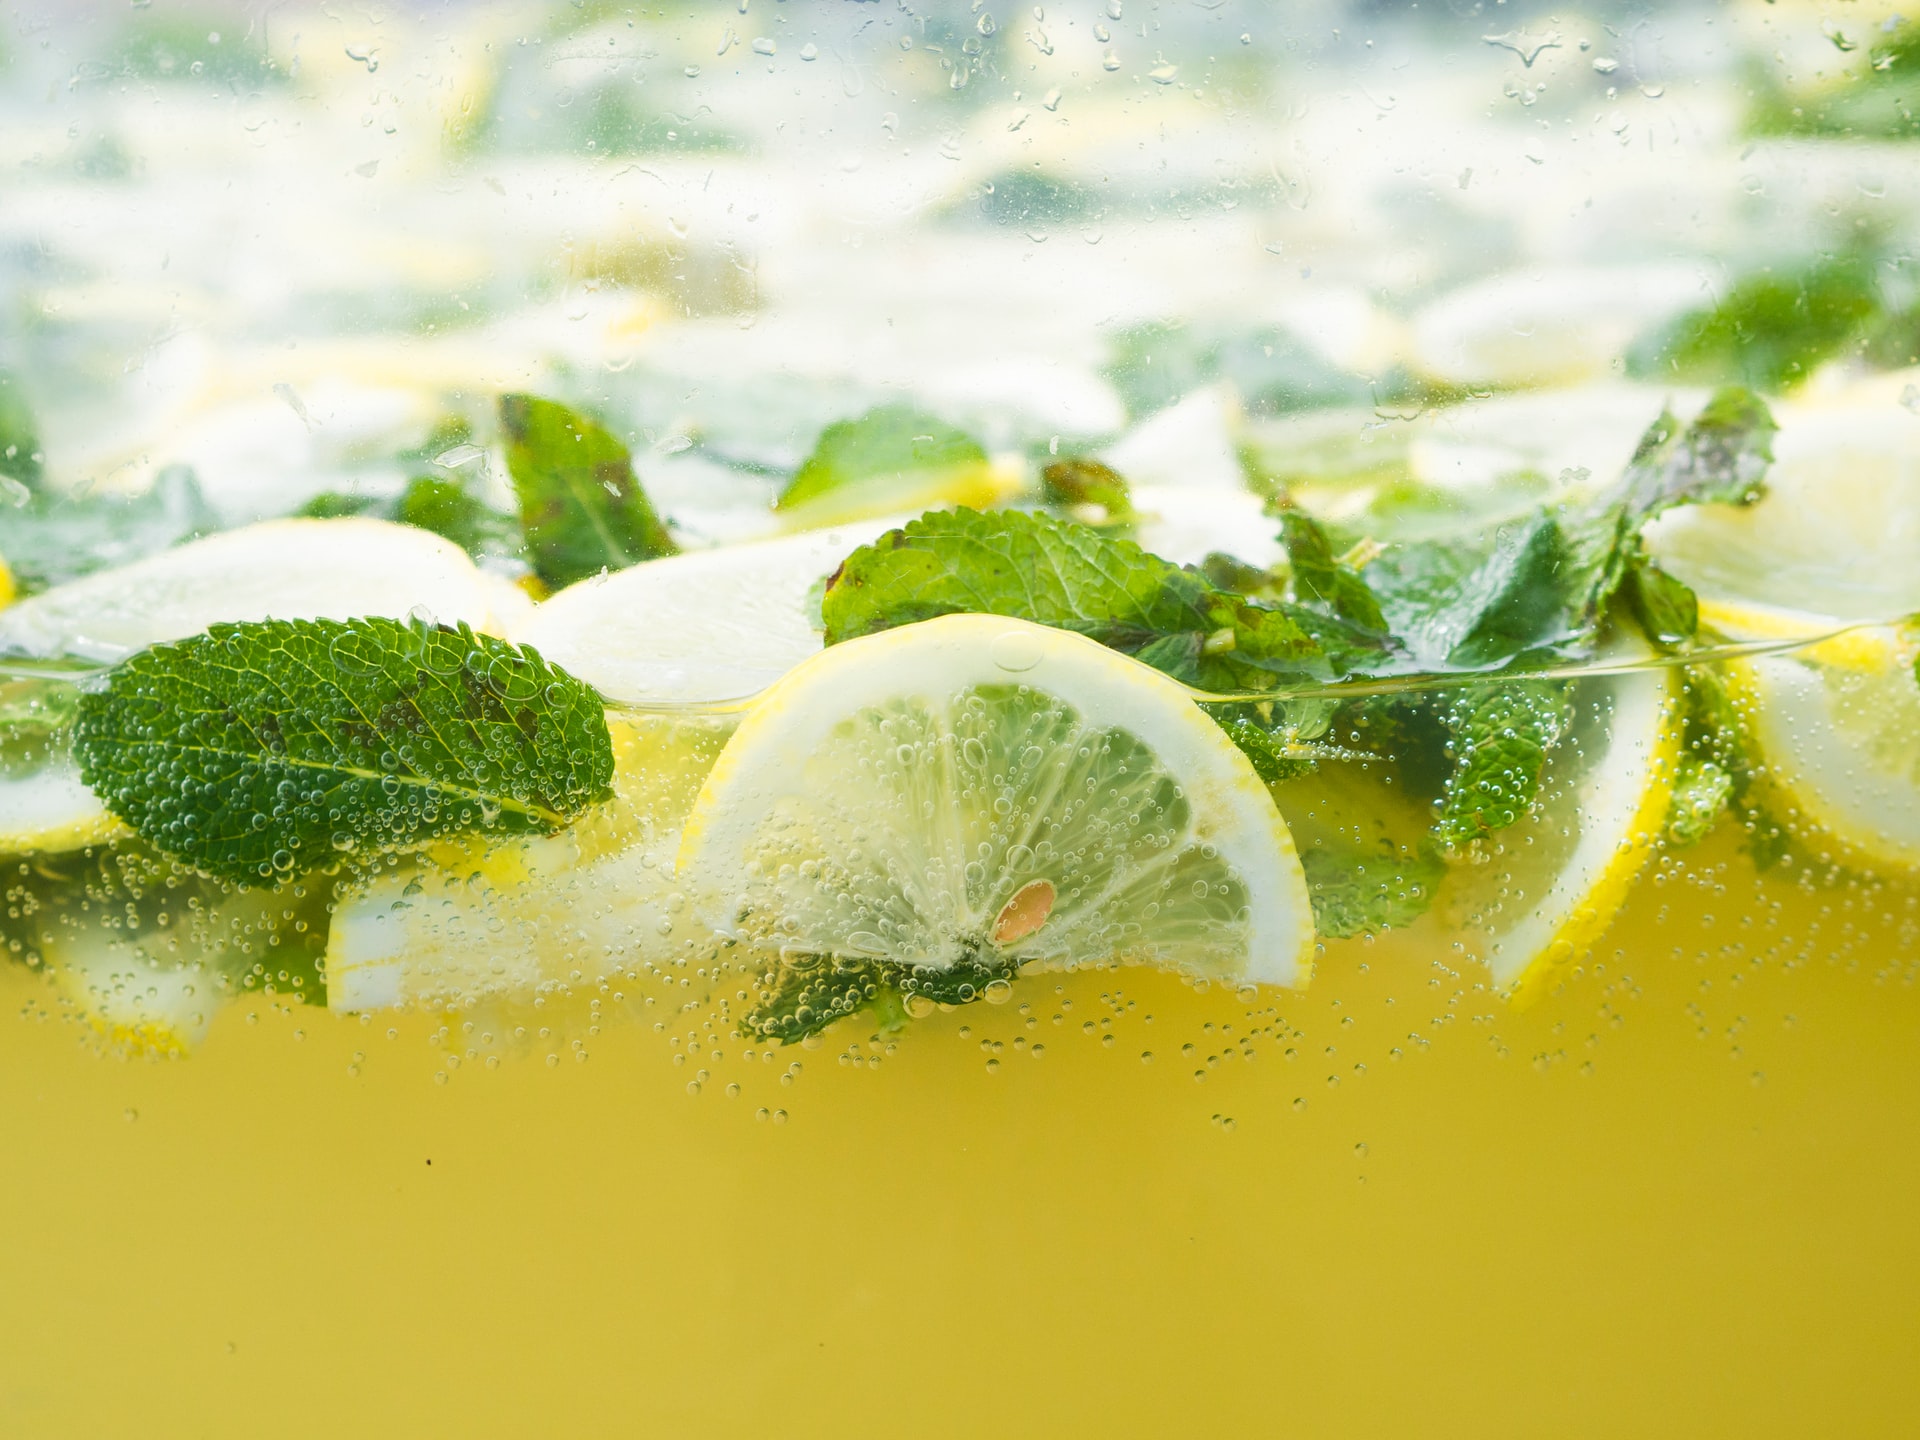 Refreshing lemonade recipes!